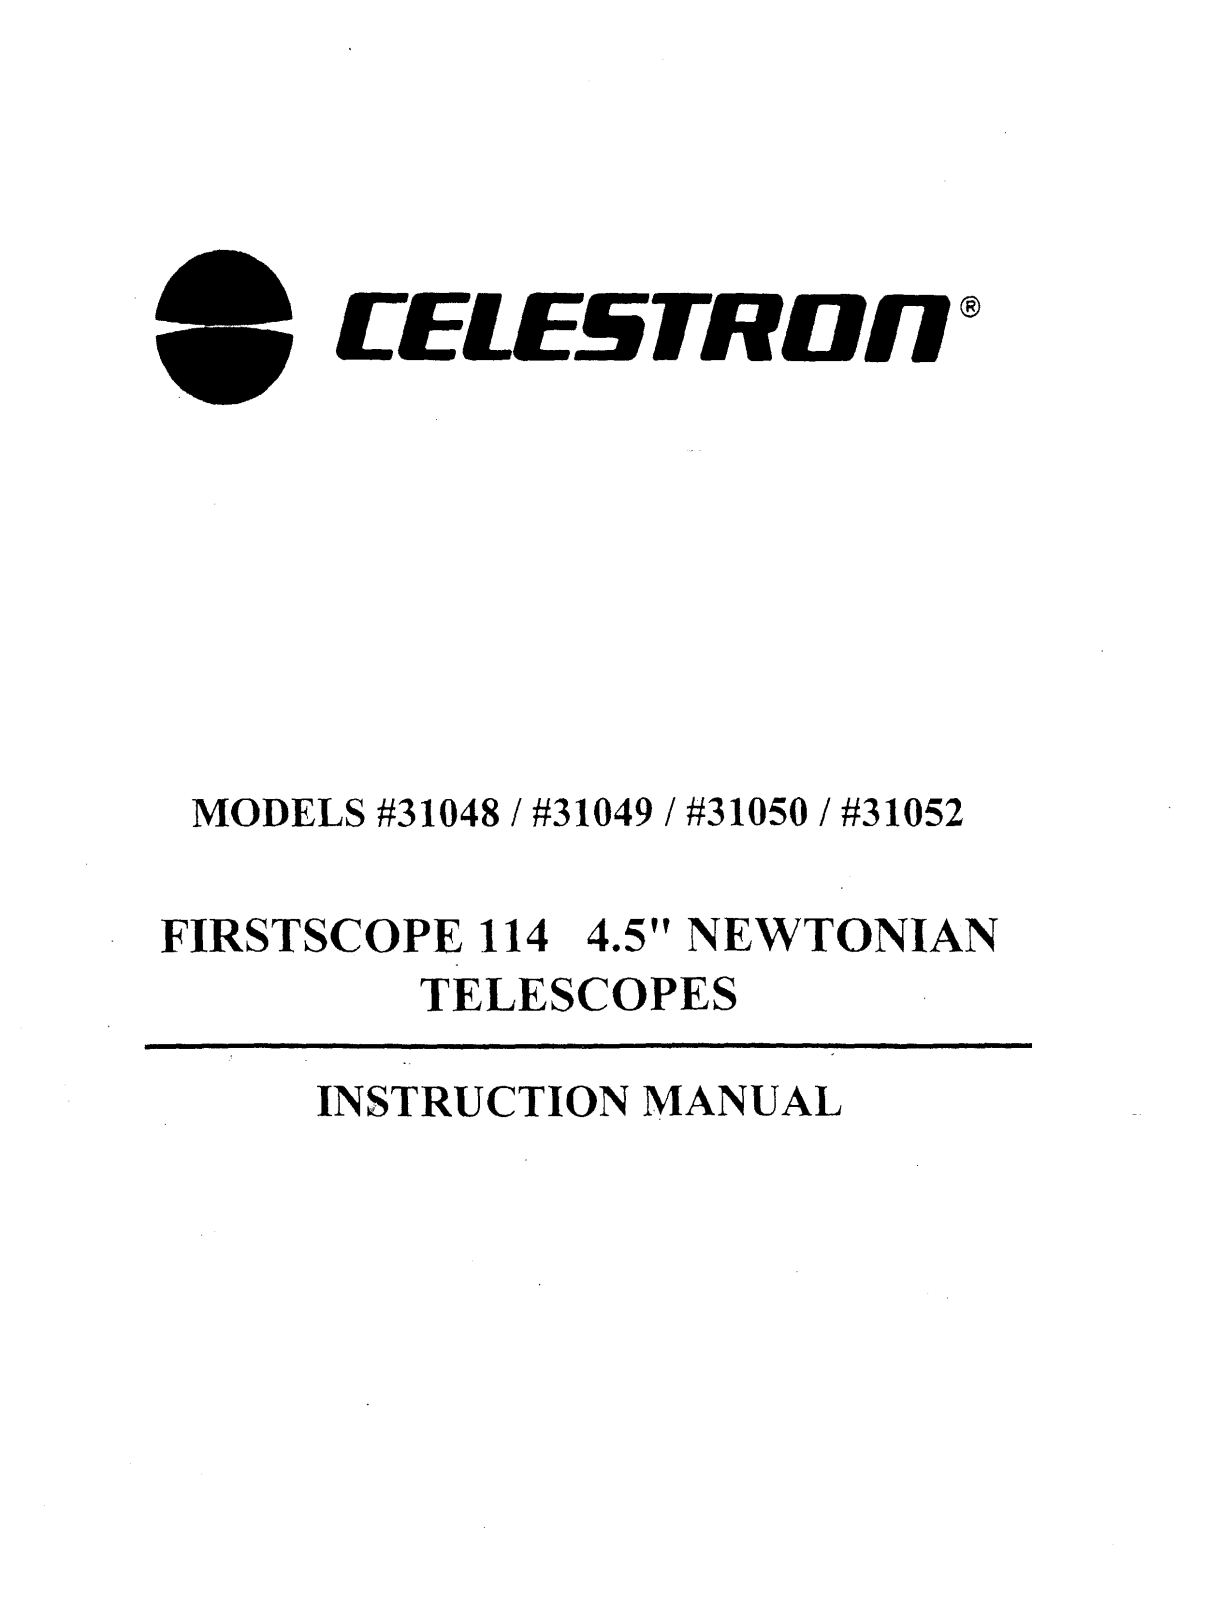 Celestron 31050, 31049, 31052, 31048 User Manual